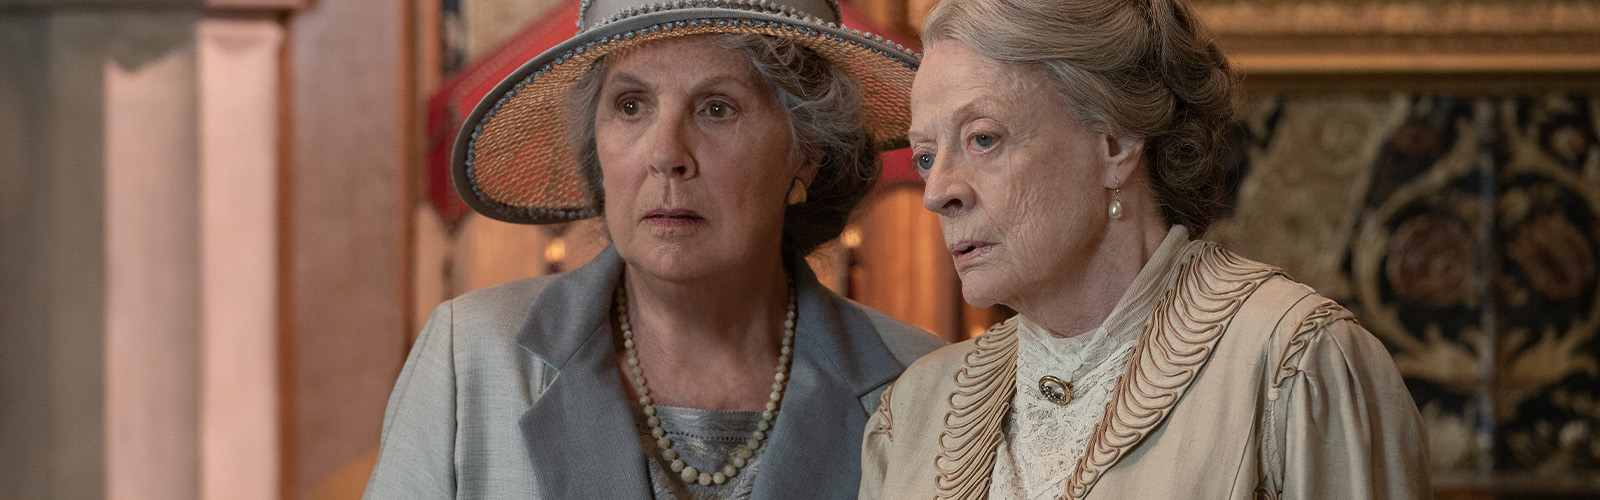 Penelope Wilton in Downton Abbey: A New Era